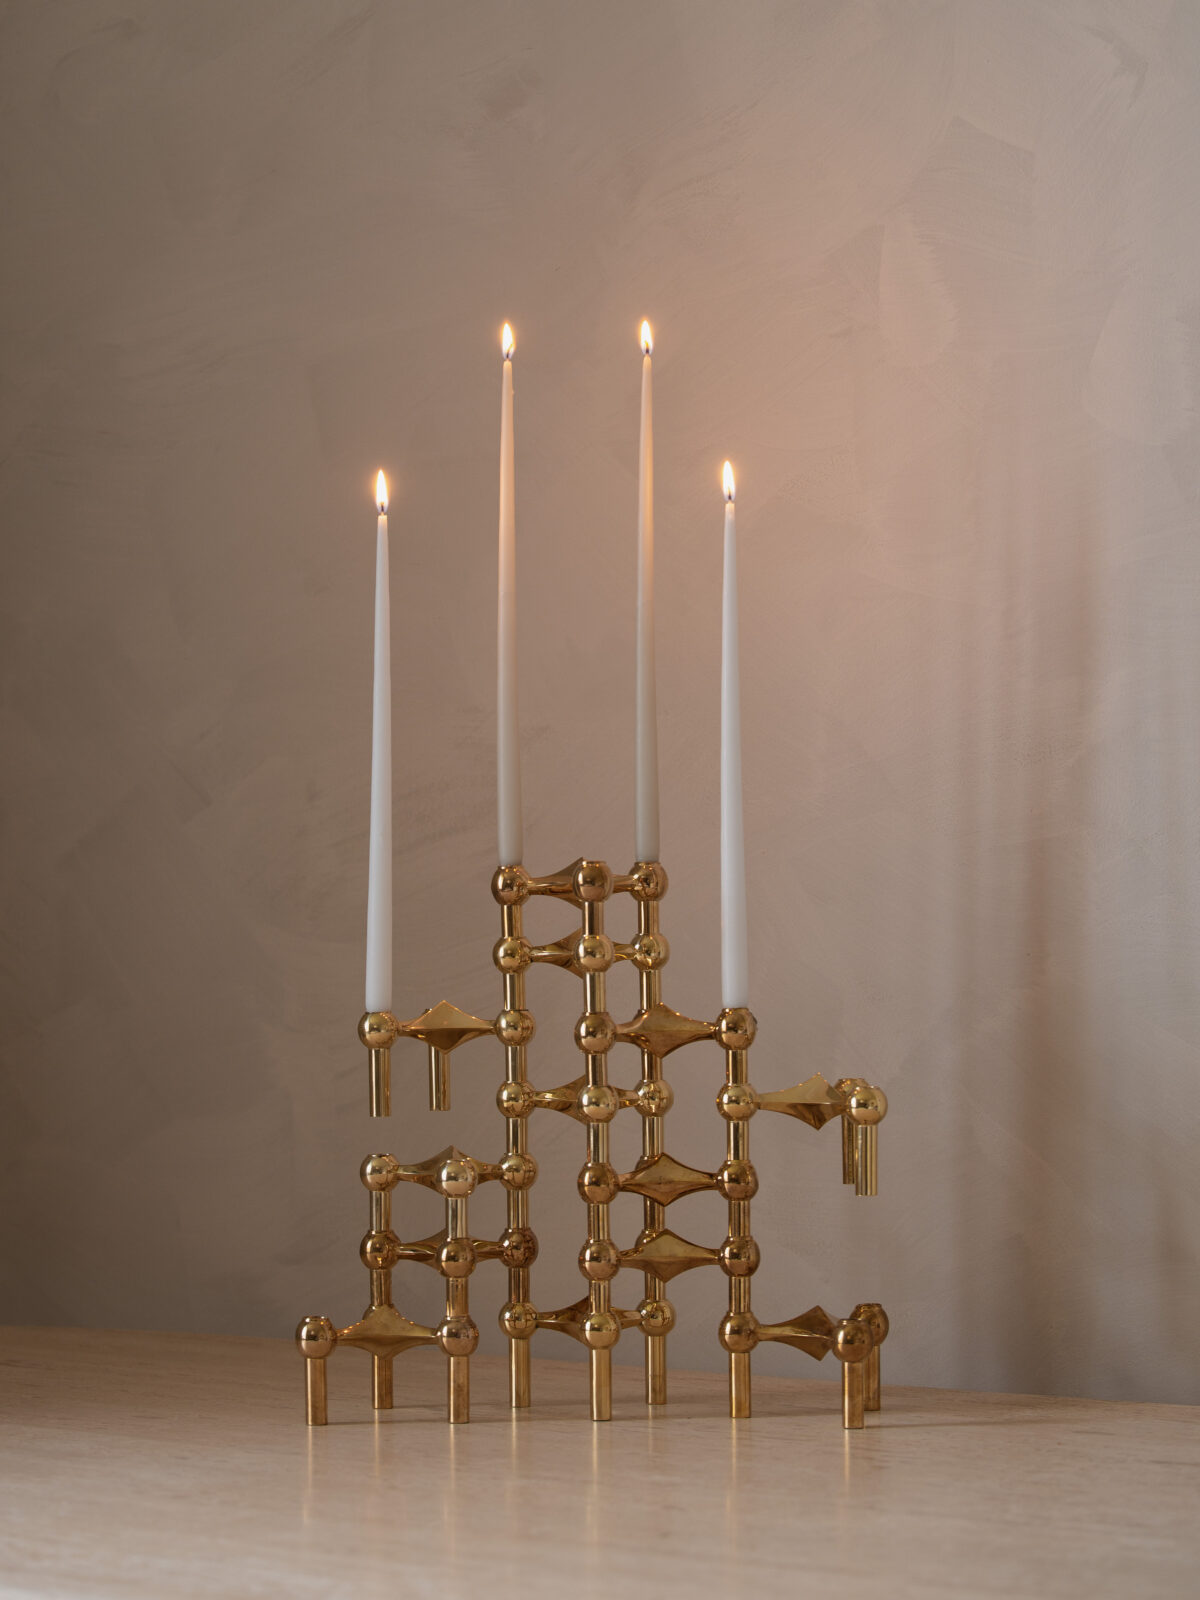 STOFF Nagel solid brass candle holder sculpture